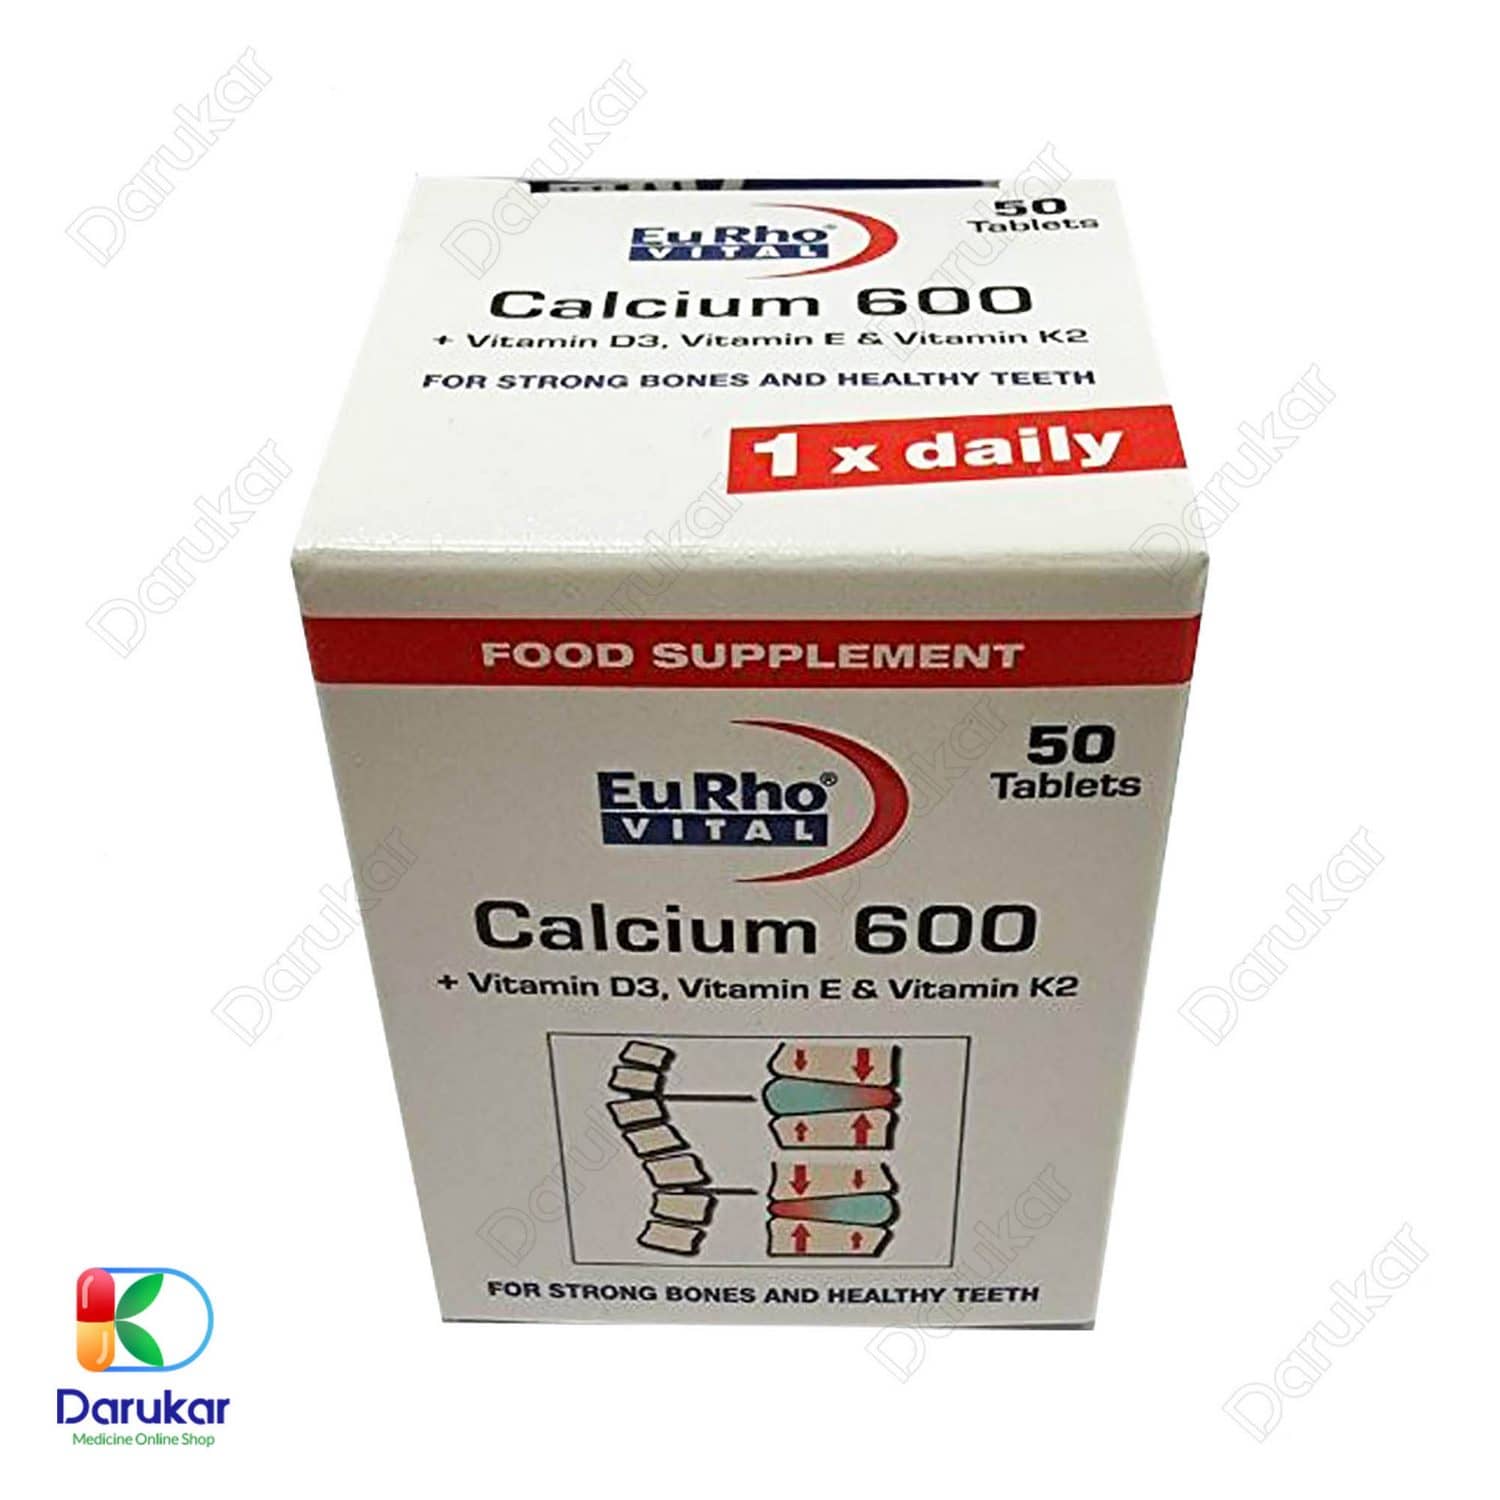 EurhoVital Calcium 600 mg tabs Image Gallery2